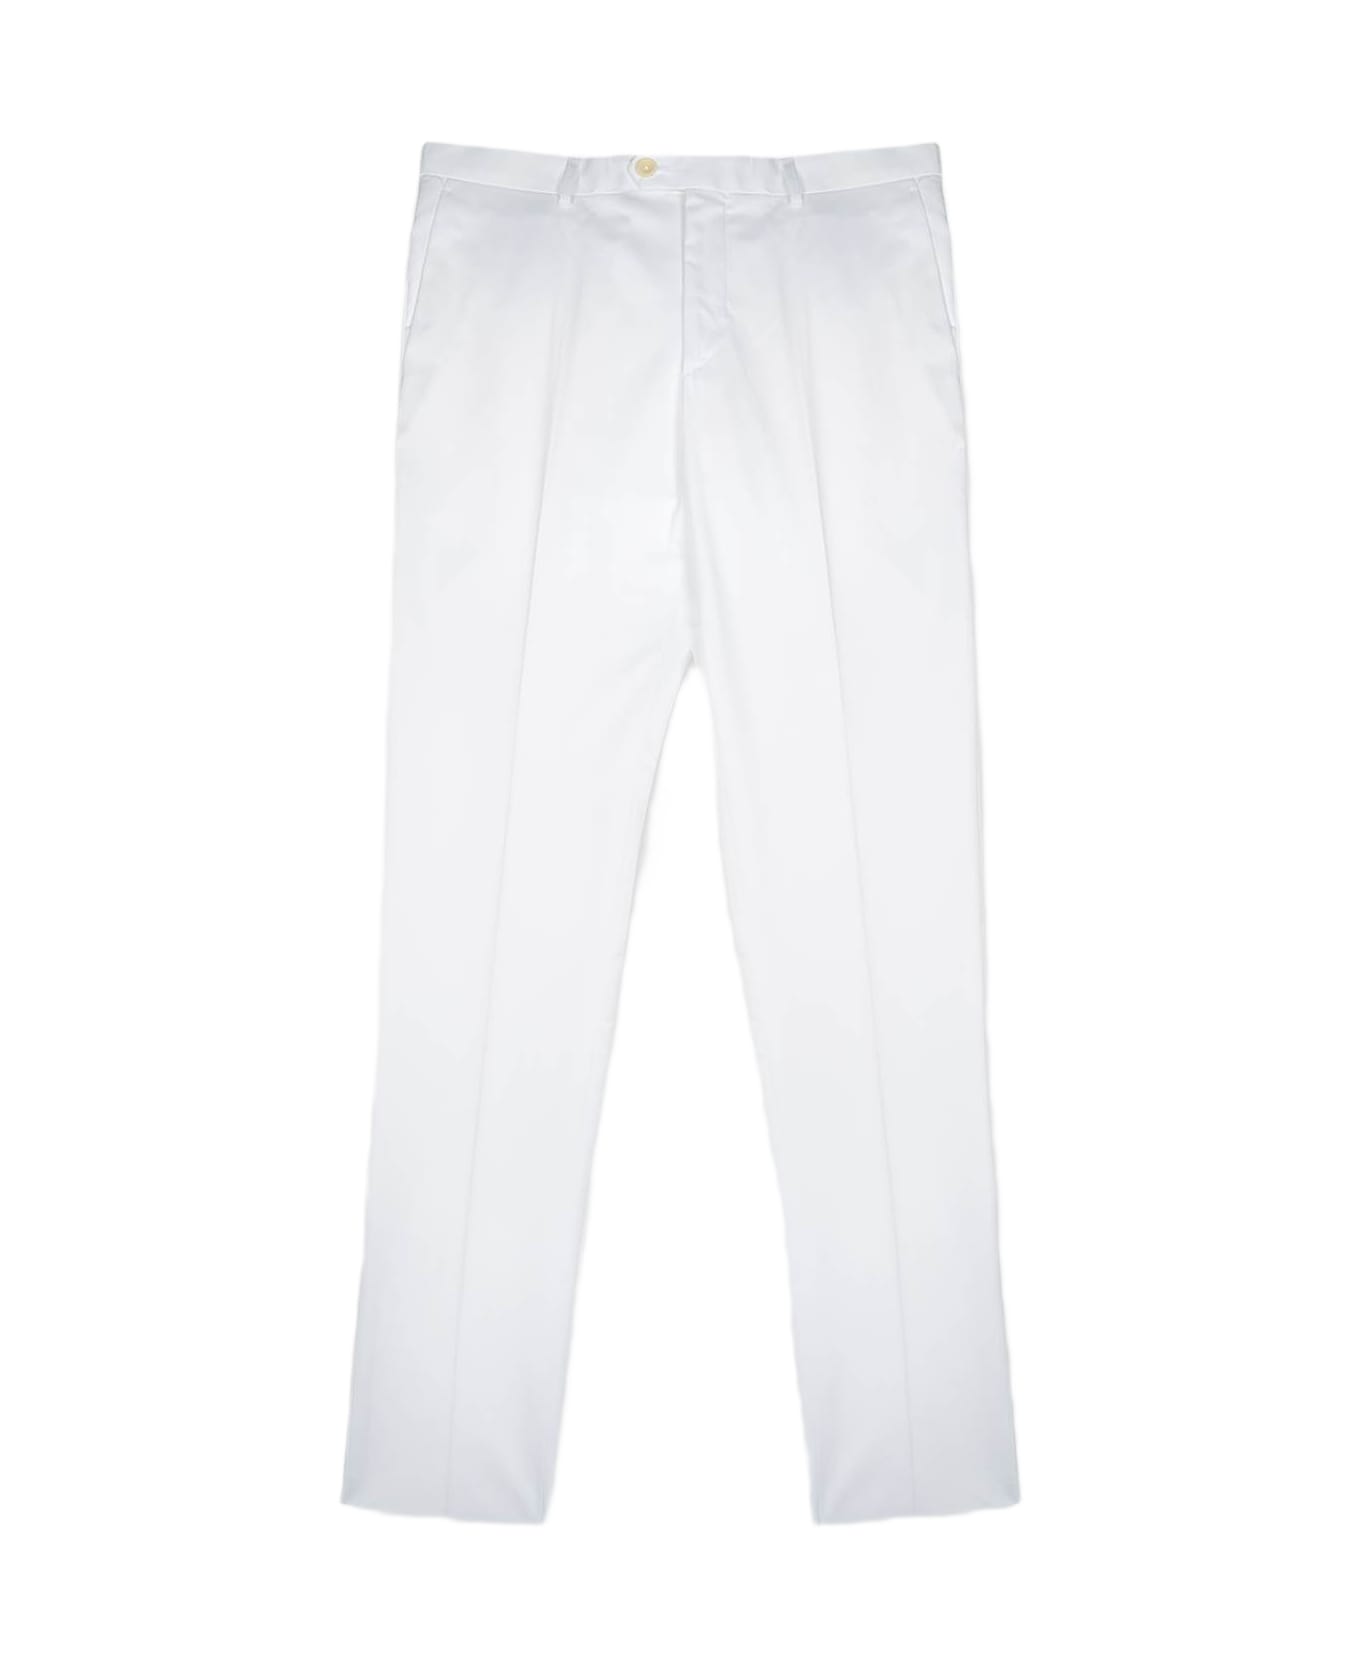 Larusmiani 'delon' Chino Pants - White